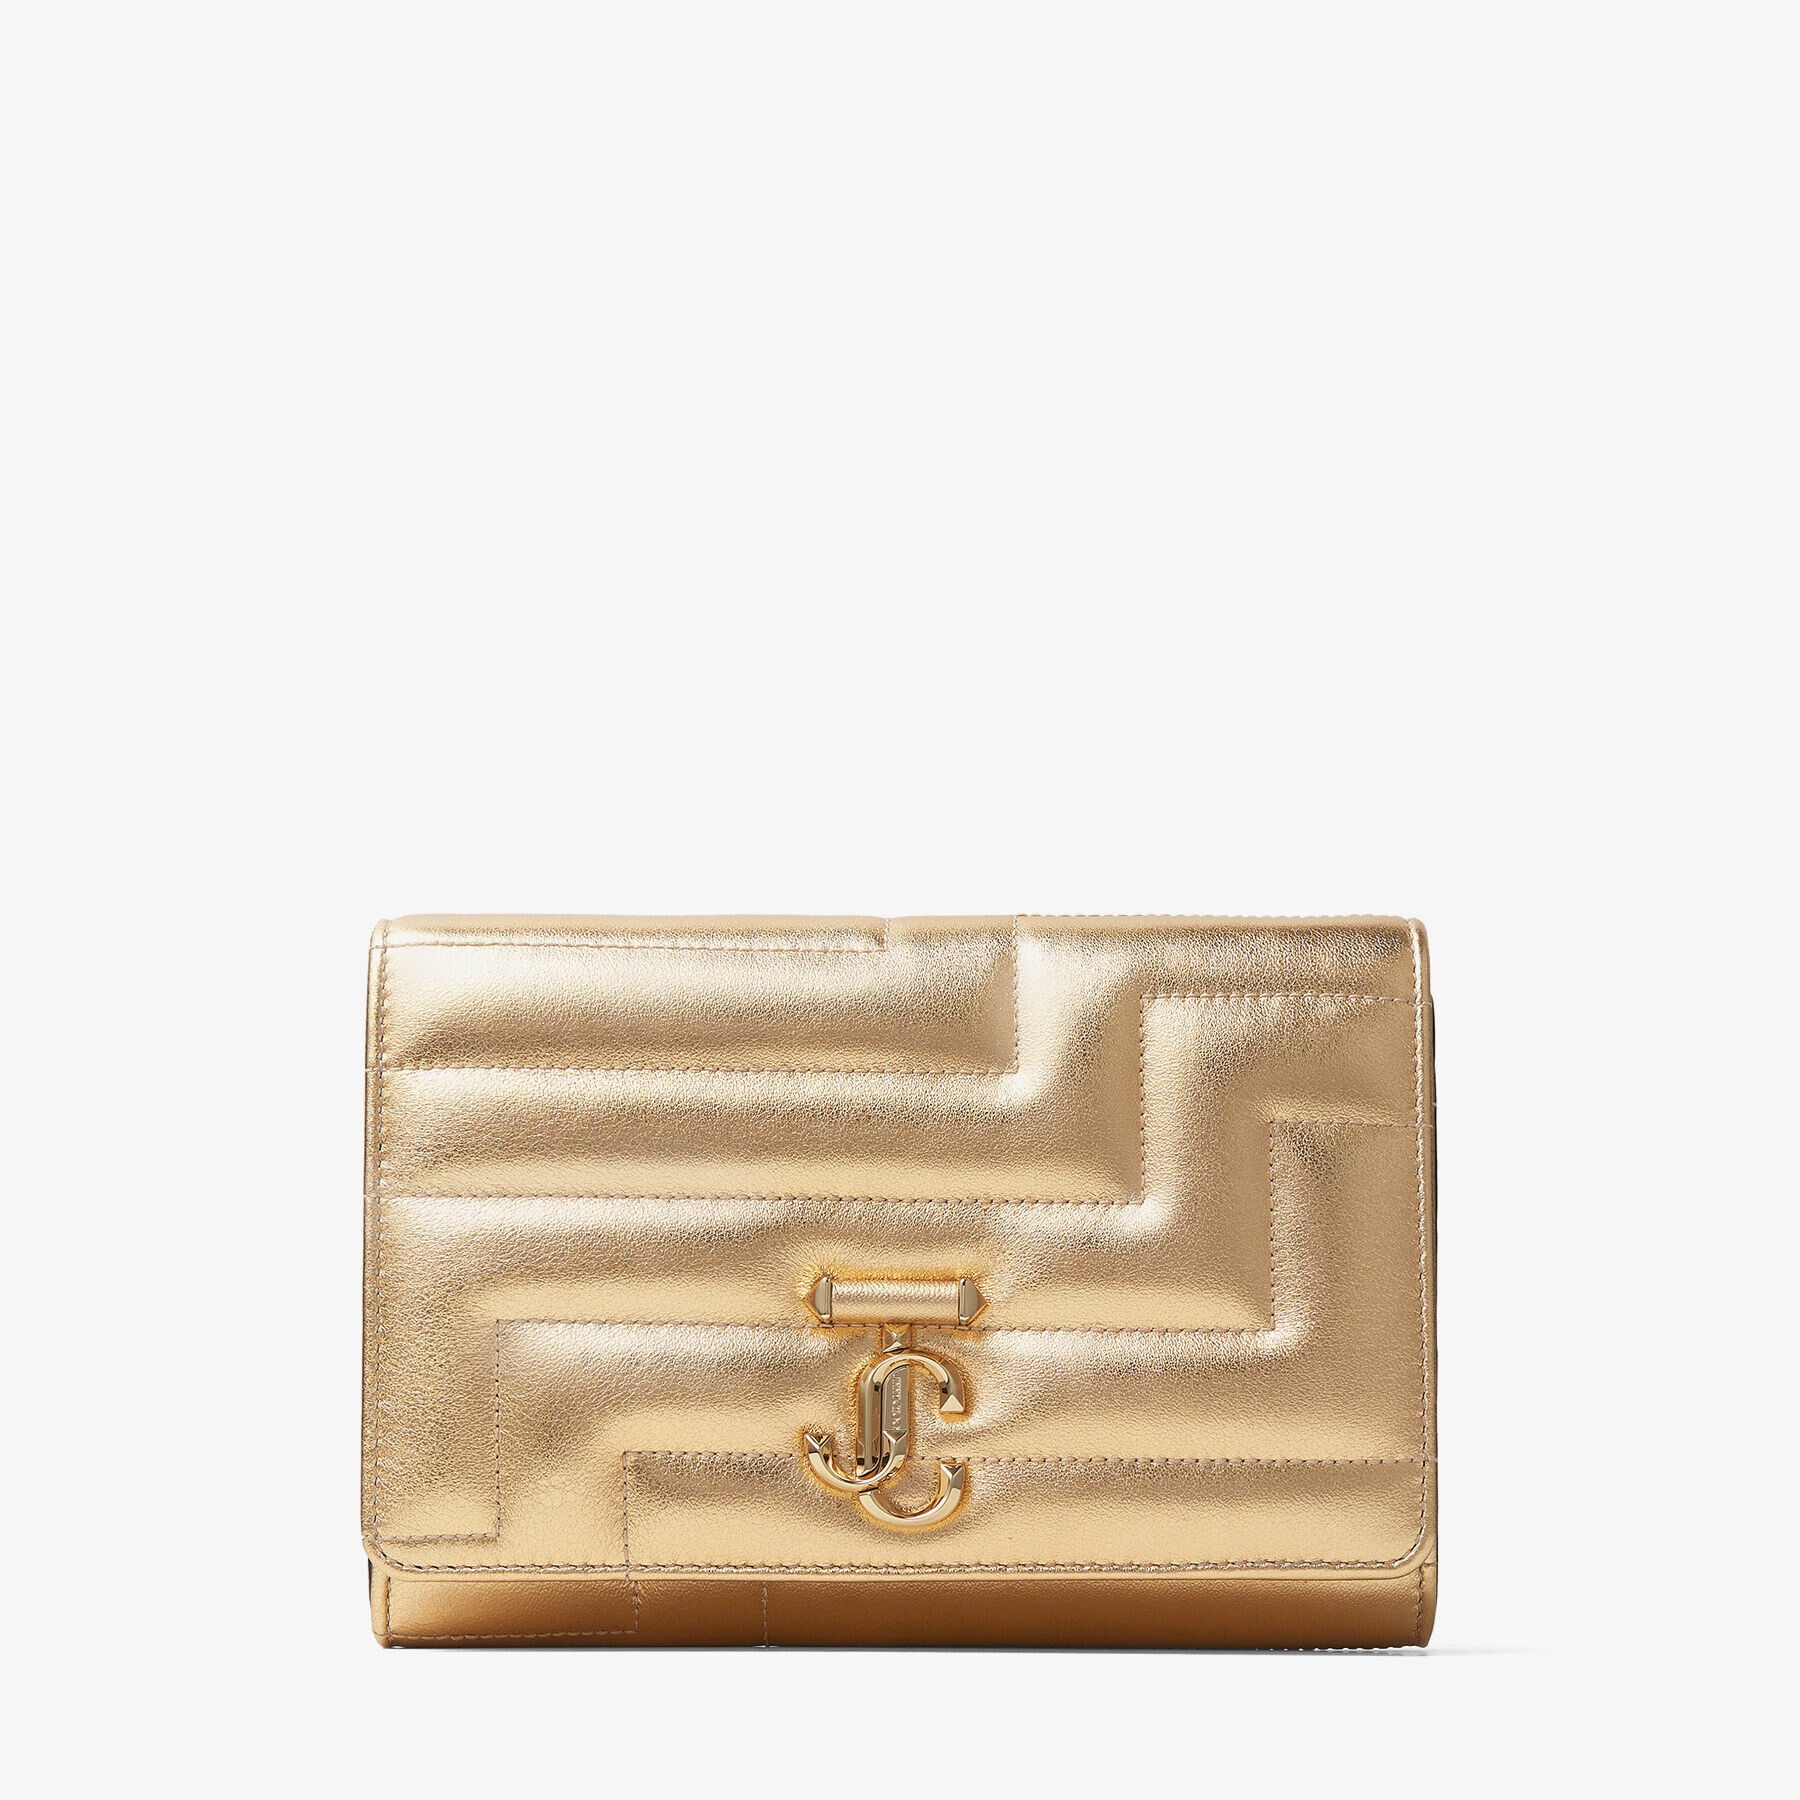 Varenne Avenue Clutch, Gold Avenue Metallic Nappa Leather Clutch Bag with  Light Gold JC Emblem